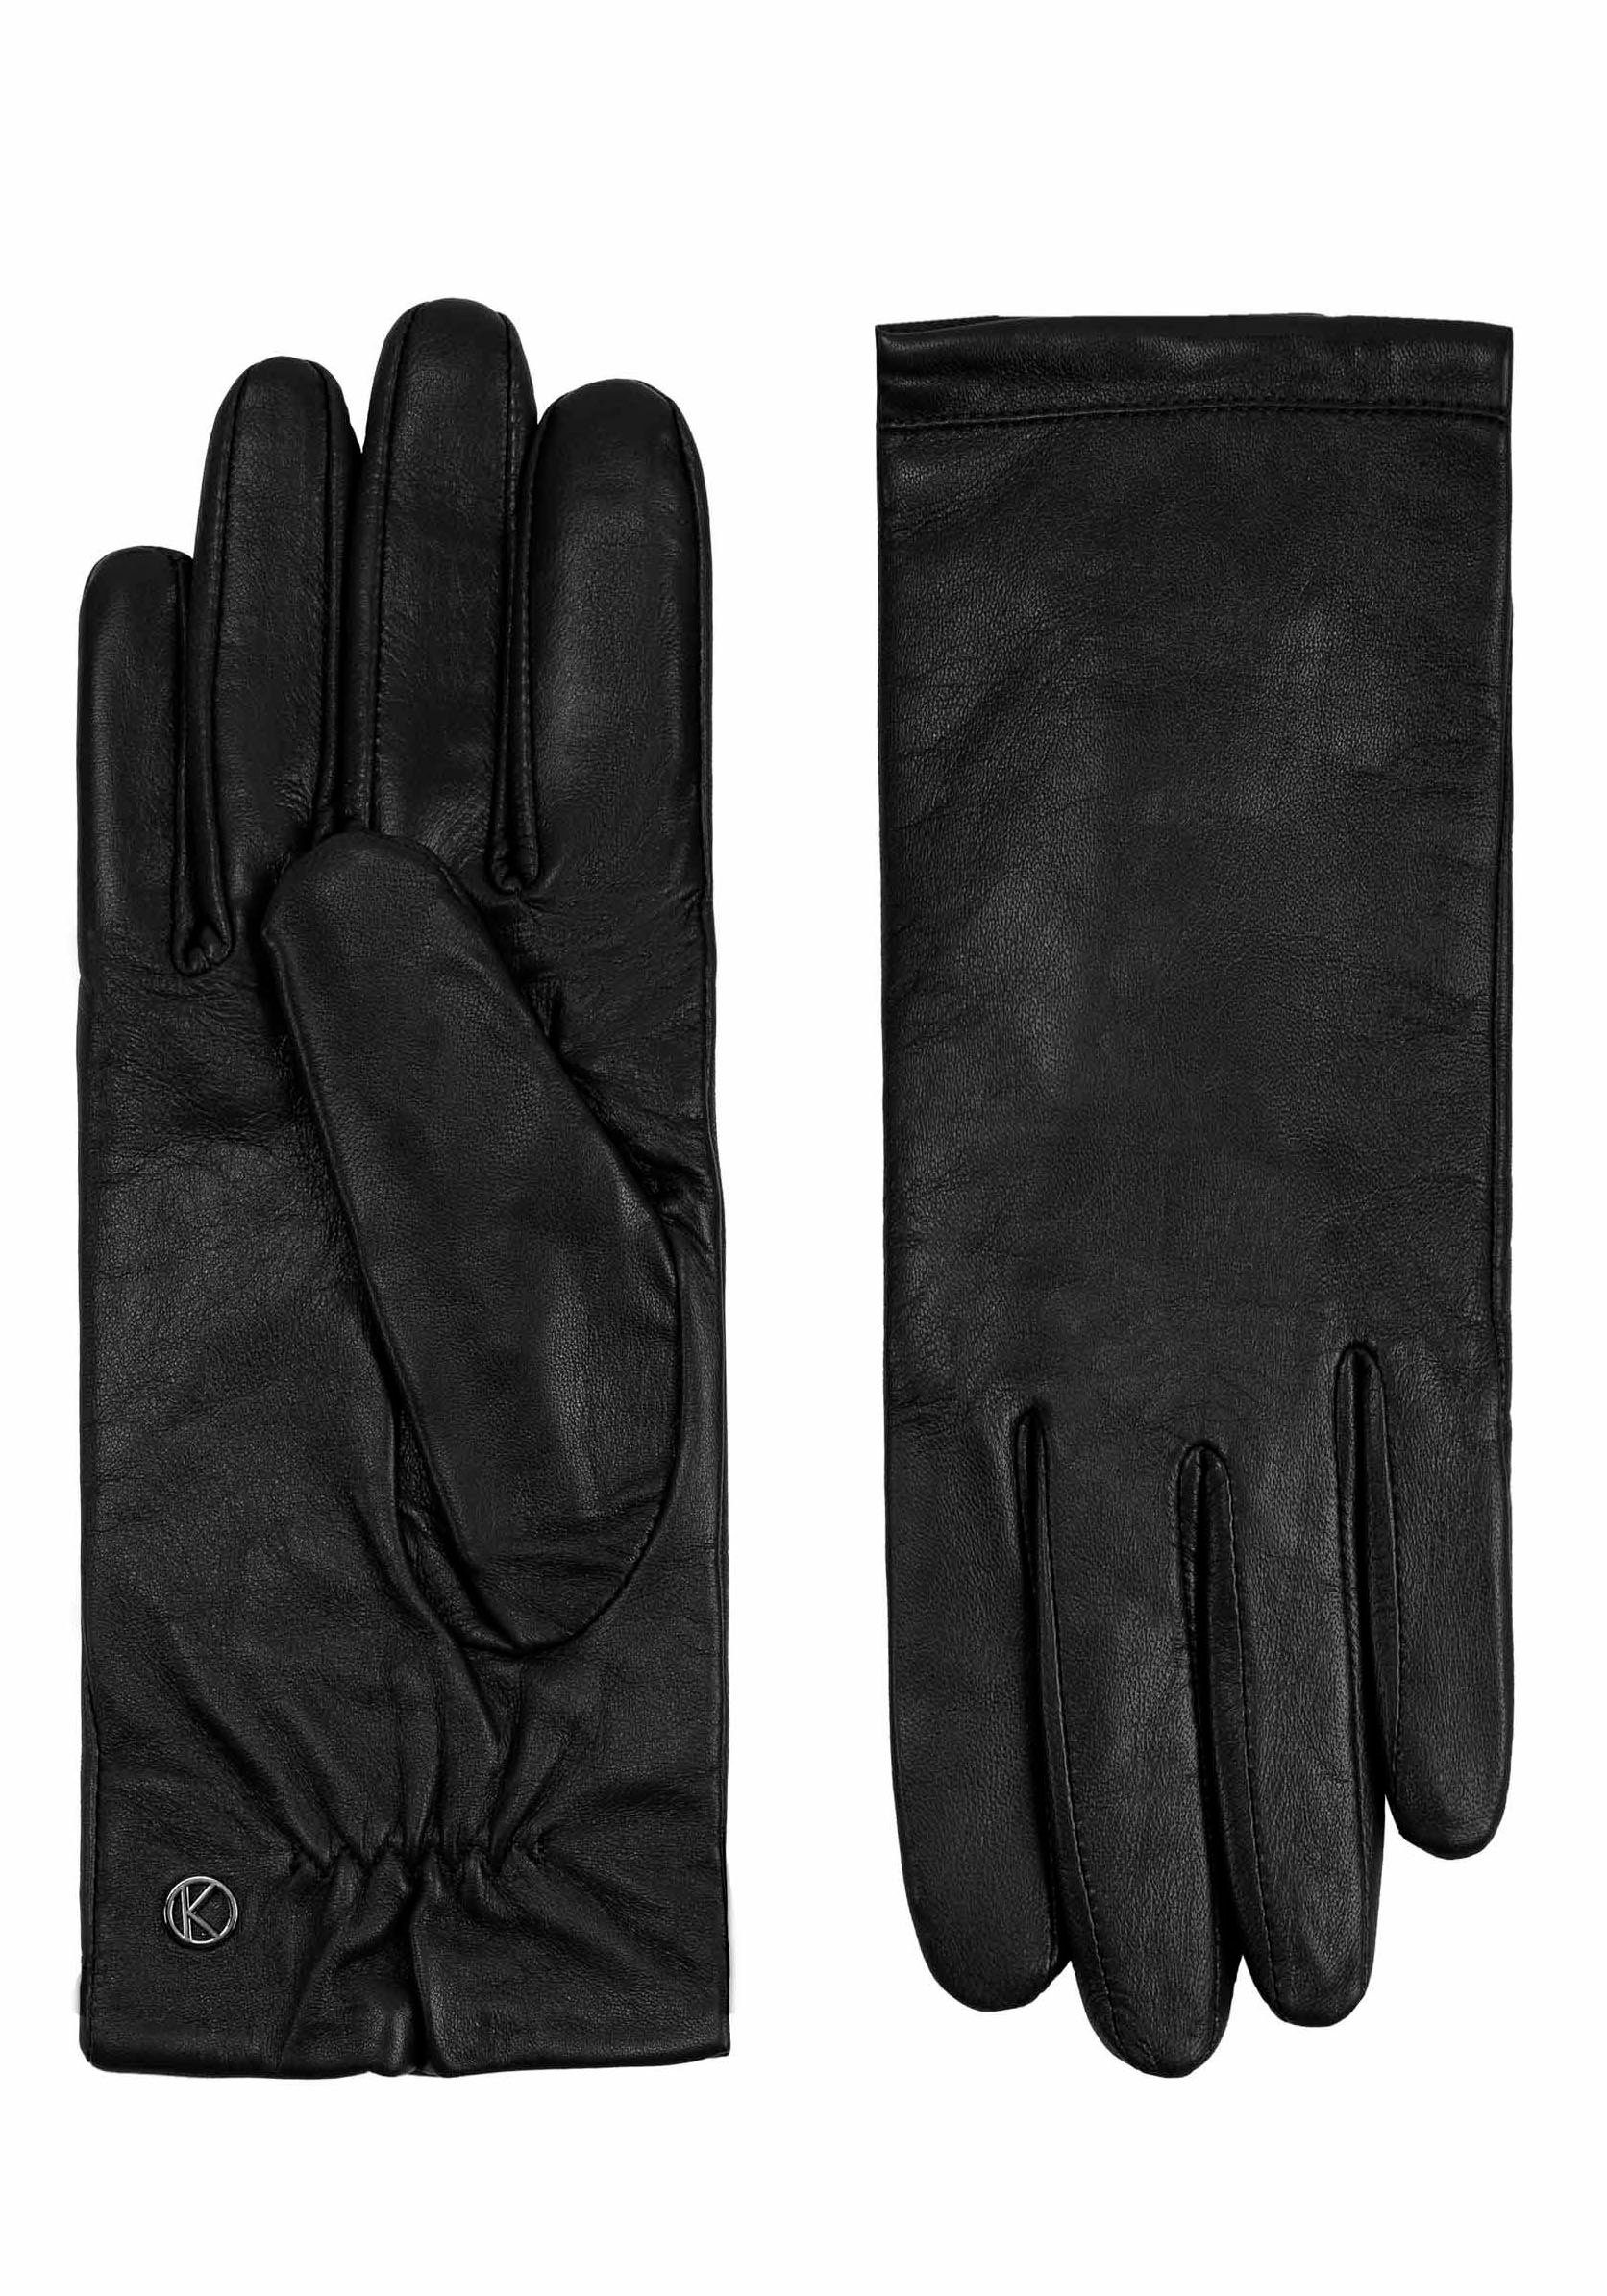 KESSLER Lederhandschuhe Chelsea Zierbiesen black Passform, schlanke Touchfunktion